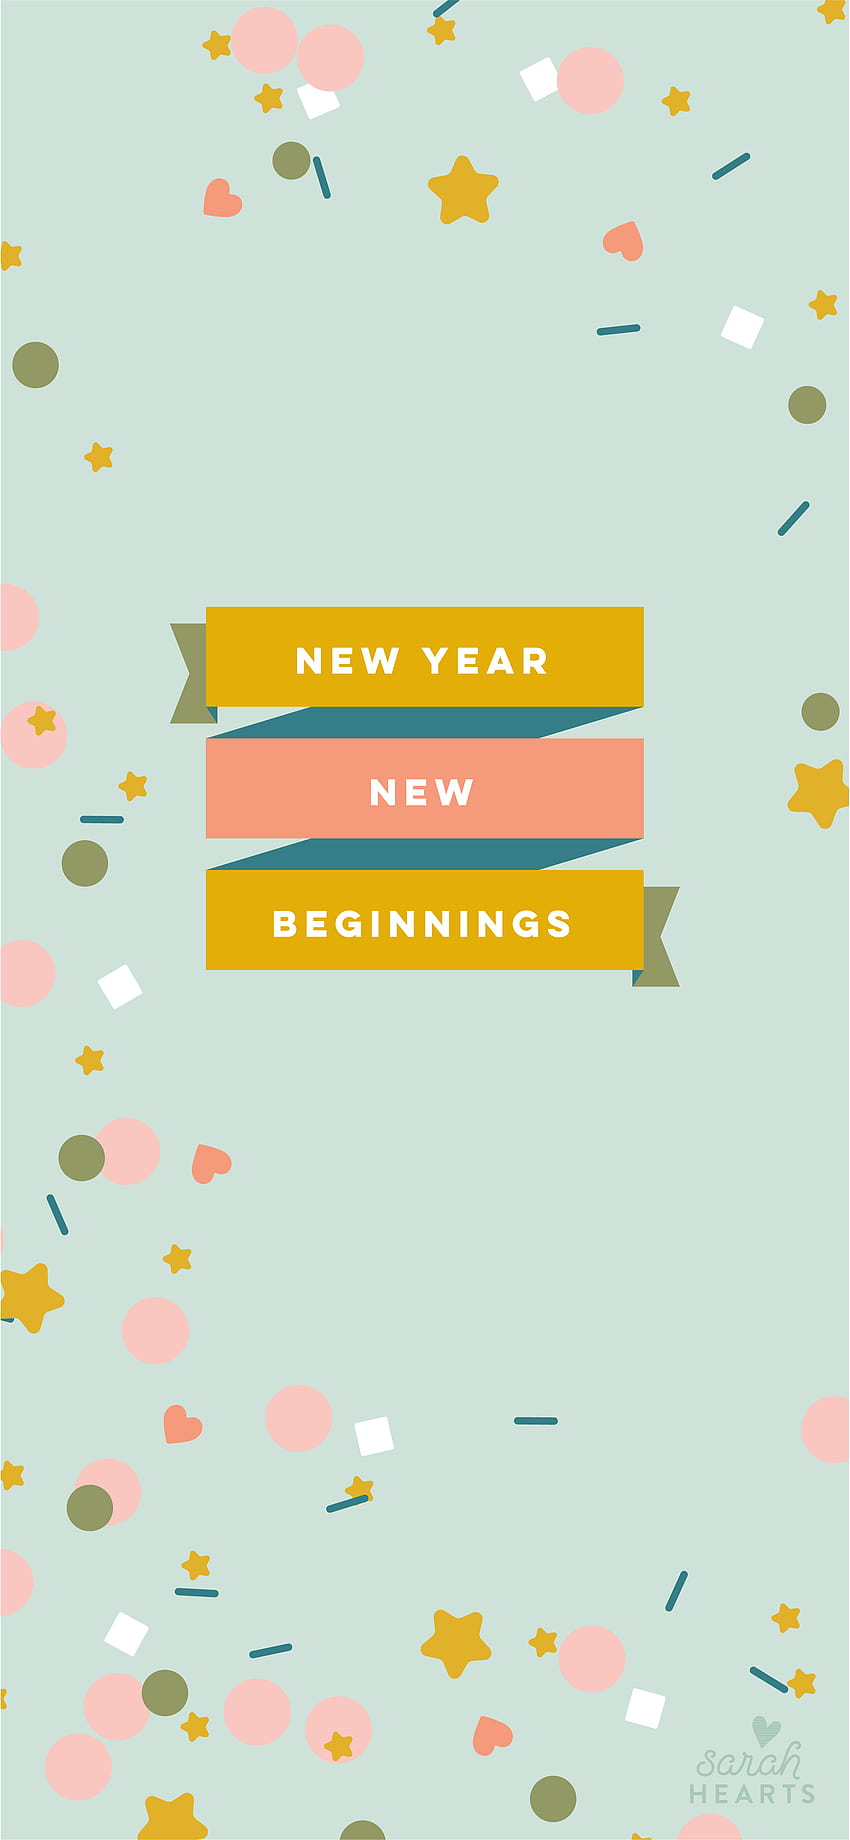 New year beginnings quote - New Year